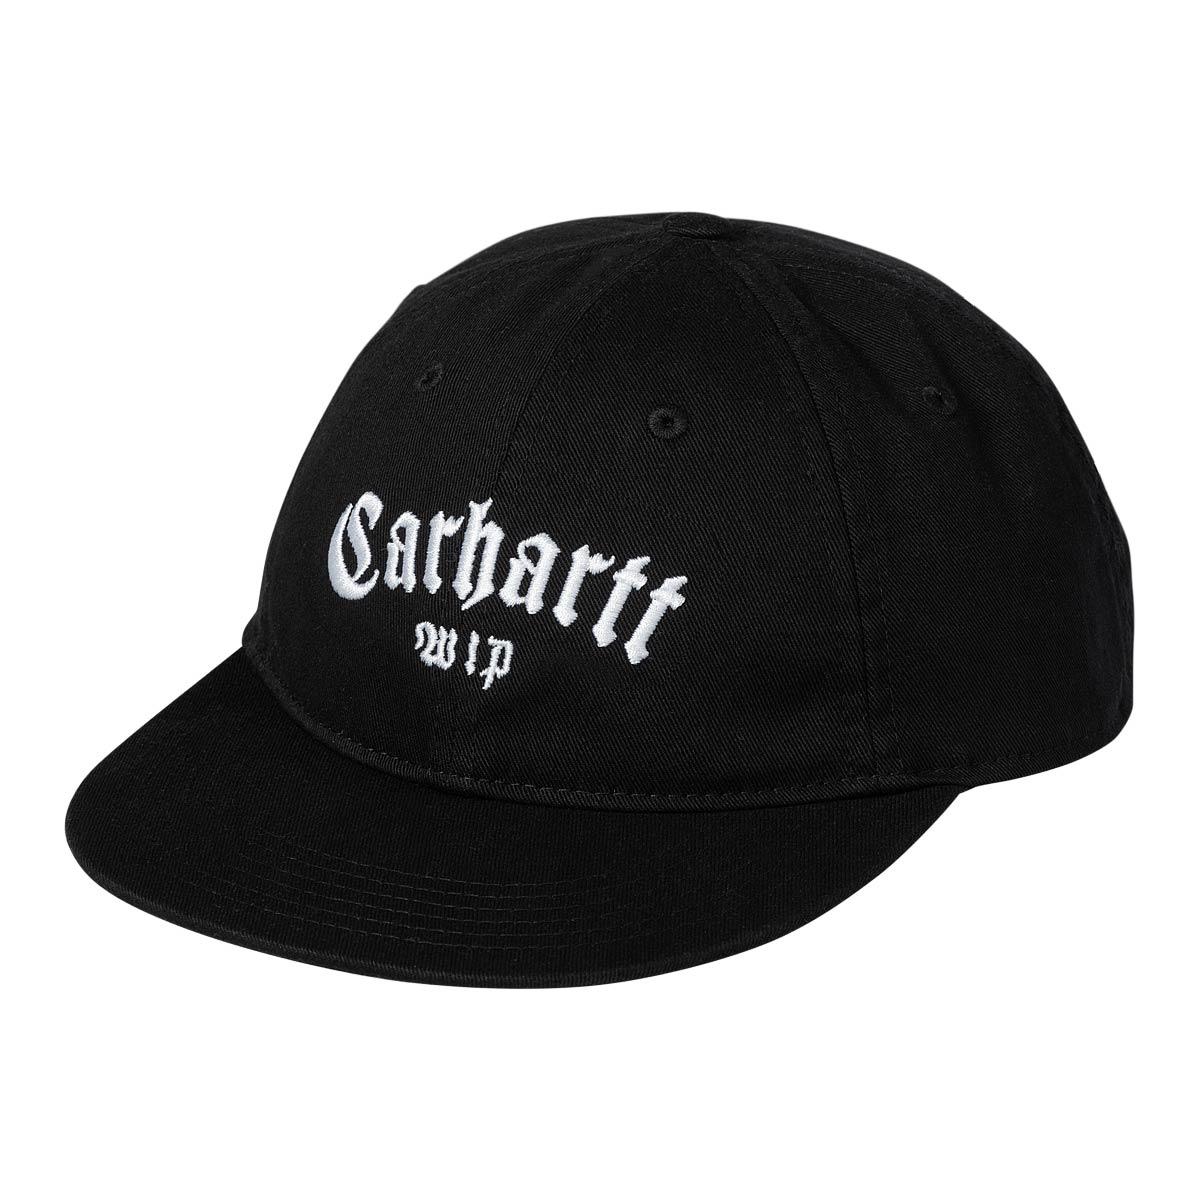 Carhartt Wip Onyx Cap, Black/white